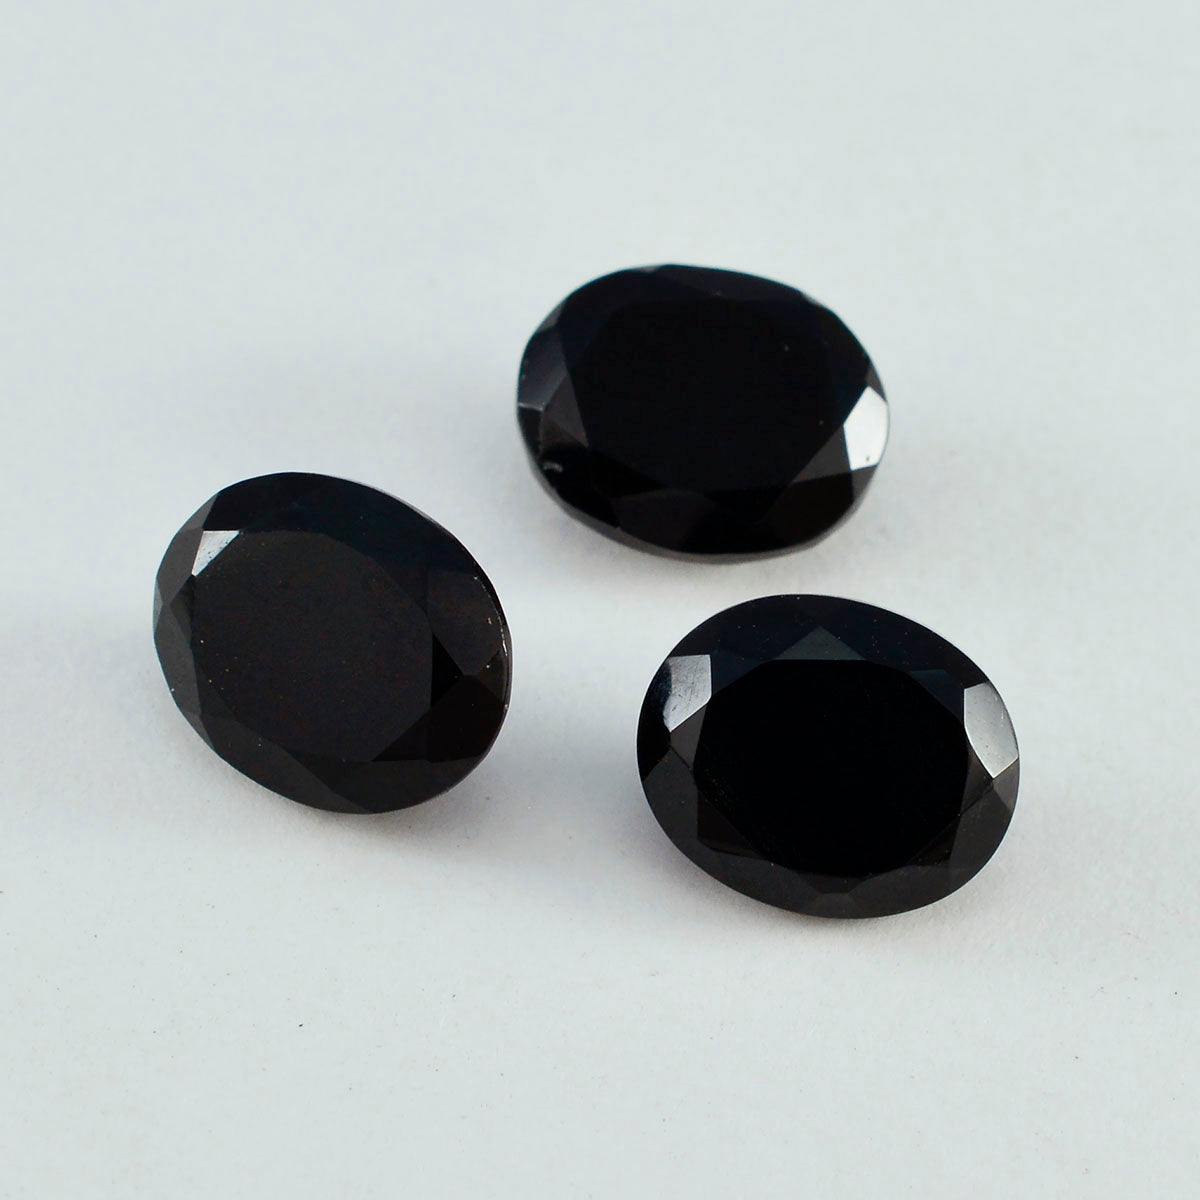 Riyogems 1PC Real Black Onyx Faceted 12x16 mm Oval Shape beauty Quality Loose Gem